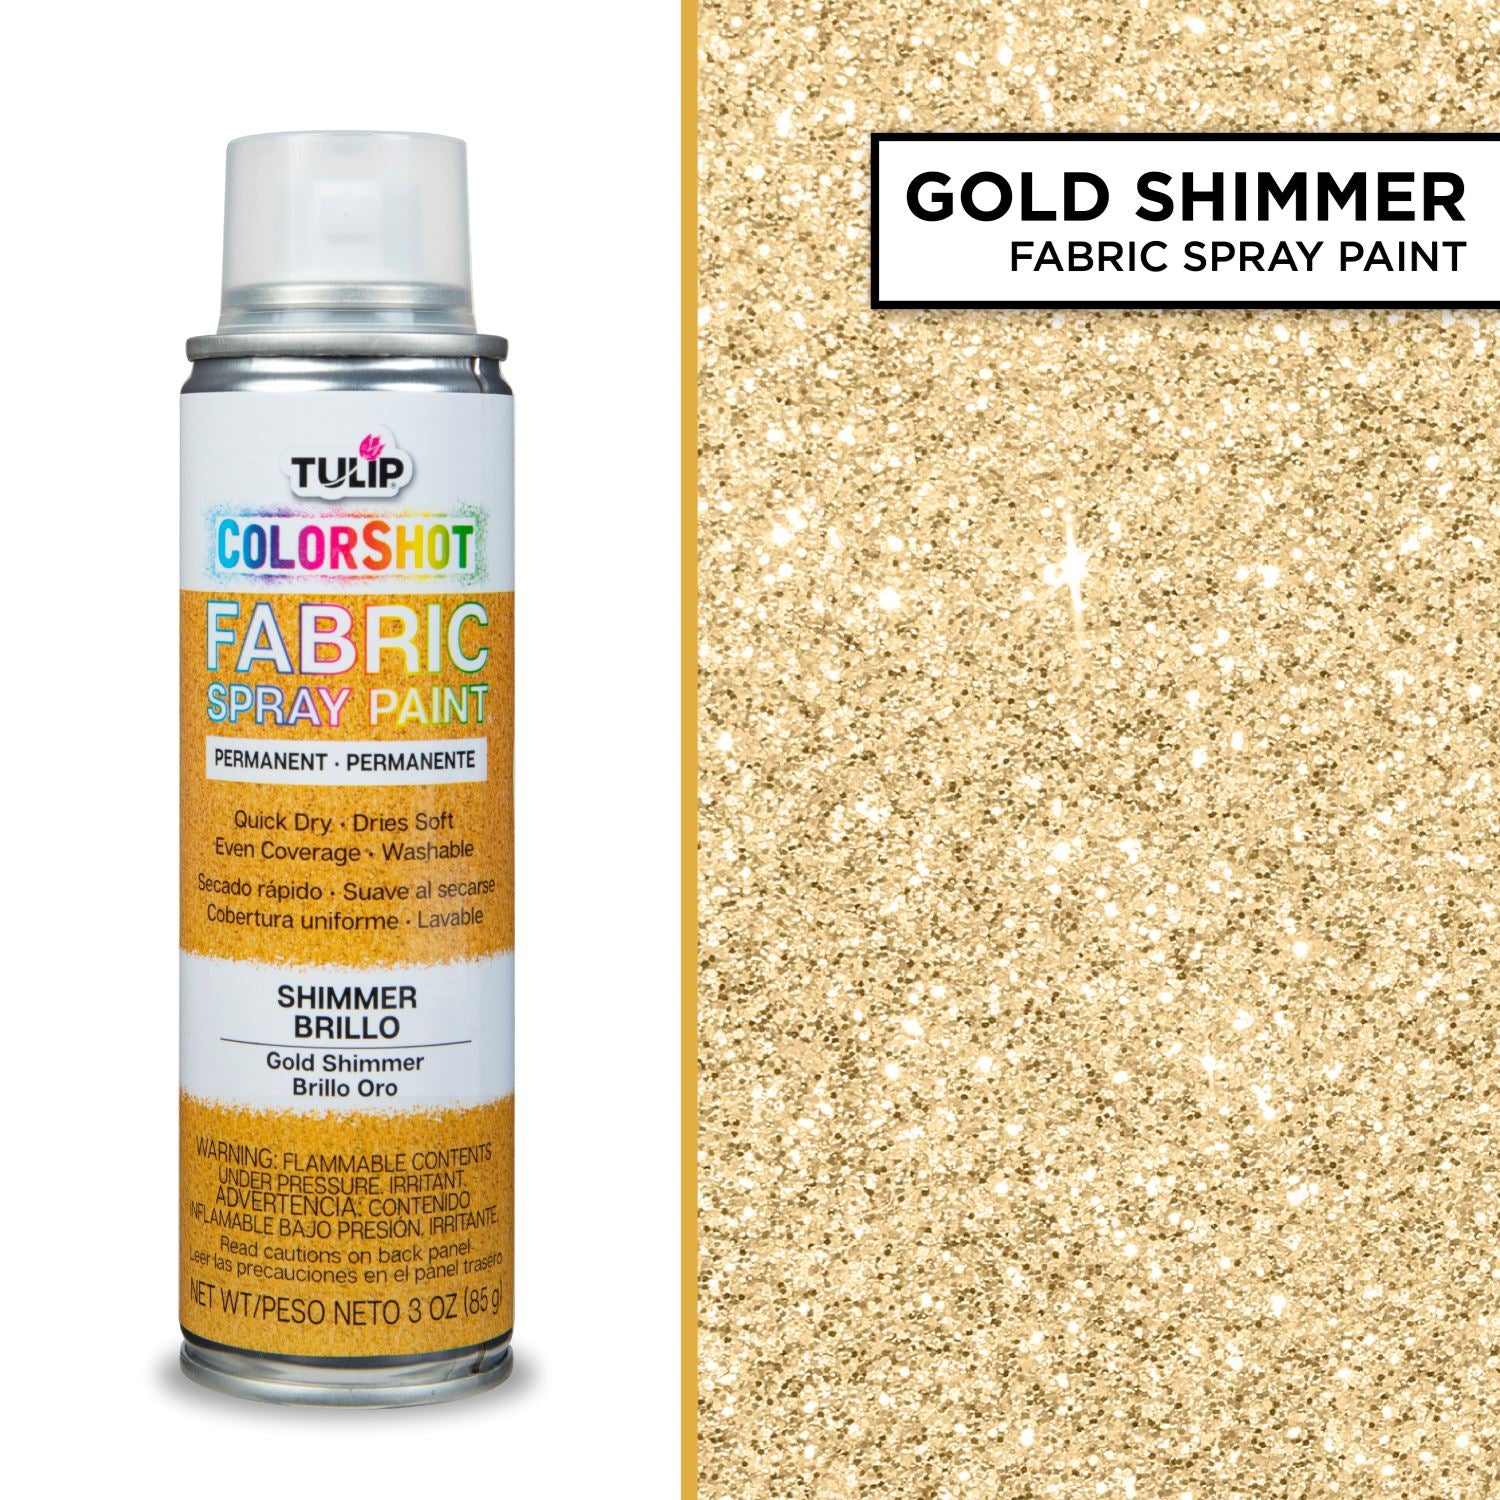 Tulip Fabric Glitter Spray 4oz Glistening Gold